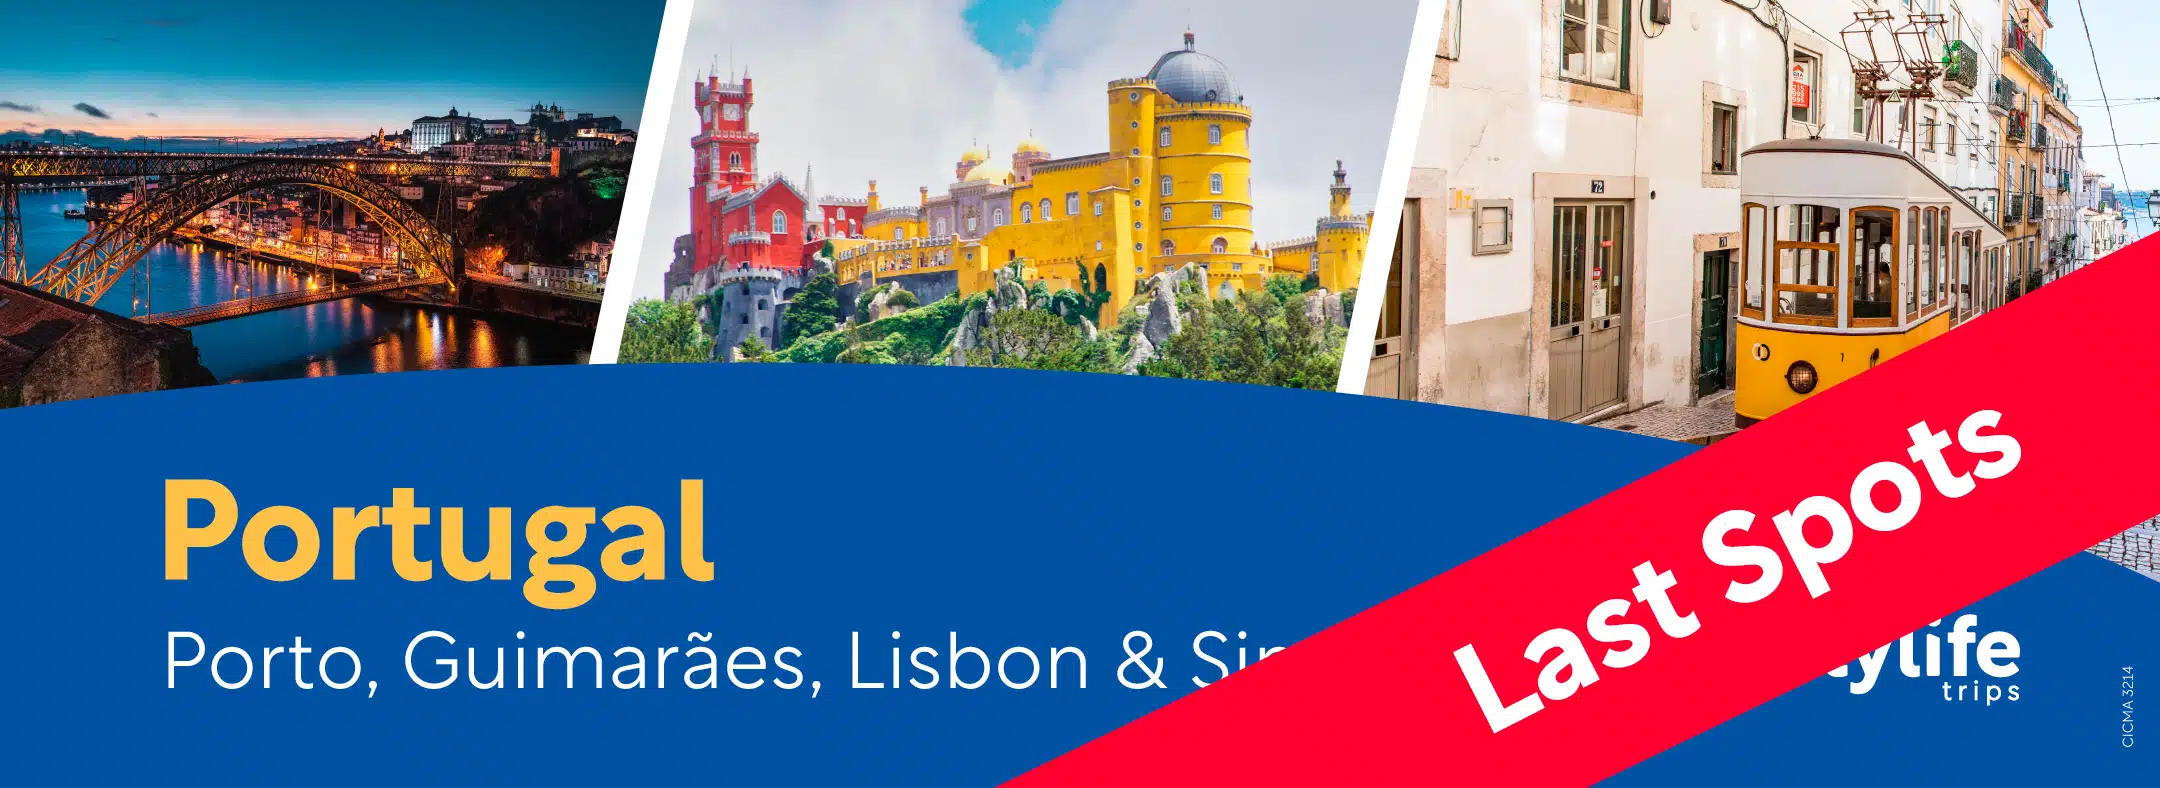 web-last-spots-banner-portugal-porto-guimaraes-lisbon-sintra-citylife-madrid